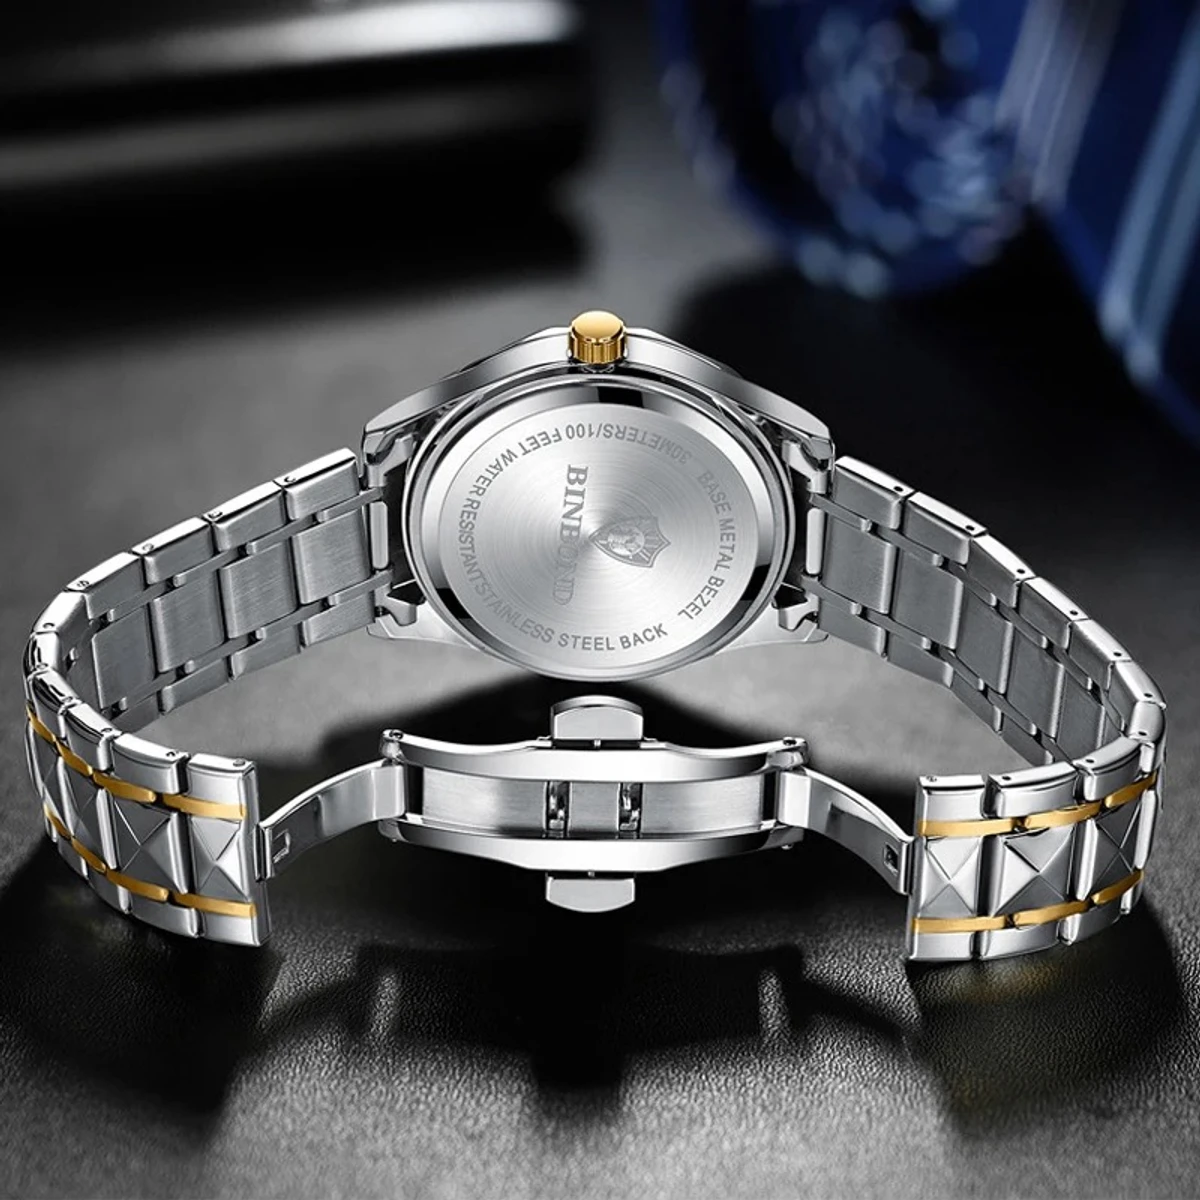 Luxury Binbond authentic men's watch waterproof night light dual calendar watch men's quartz watch diamond ceiling glass- Golden